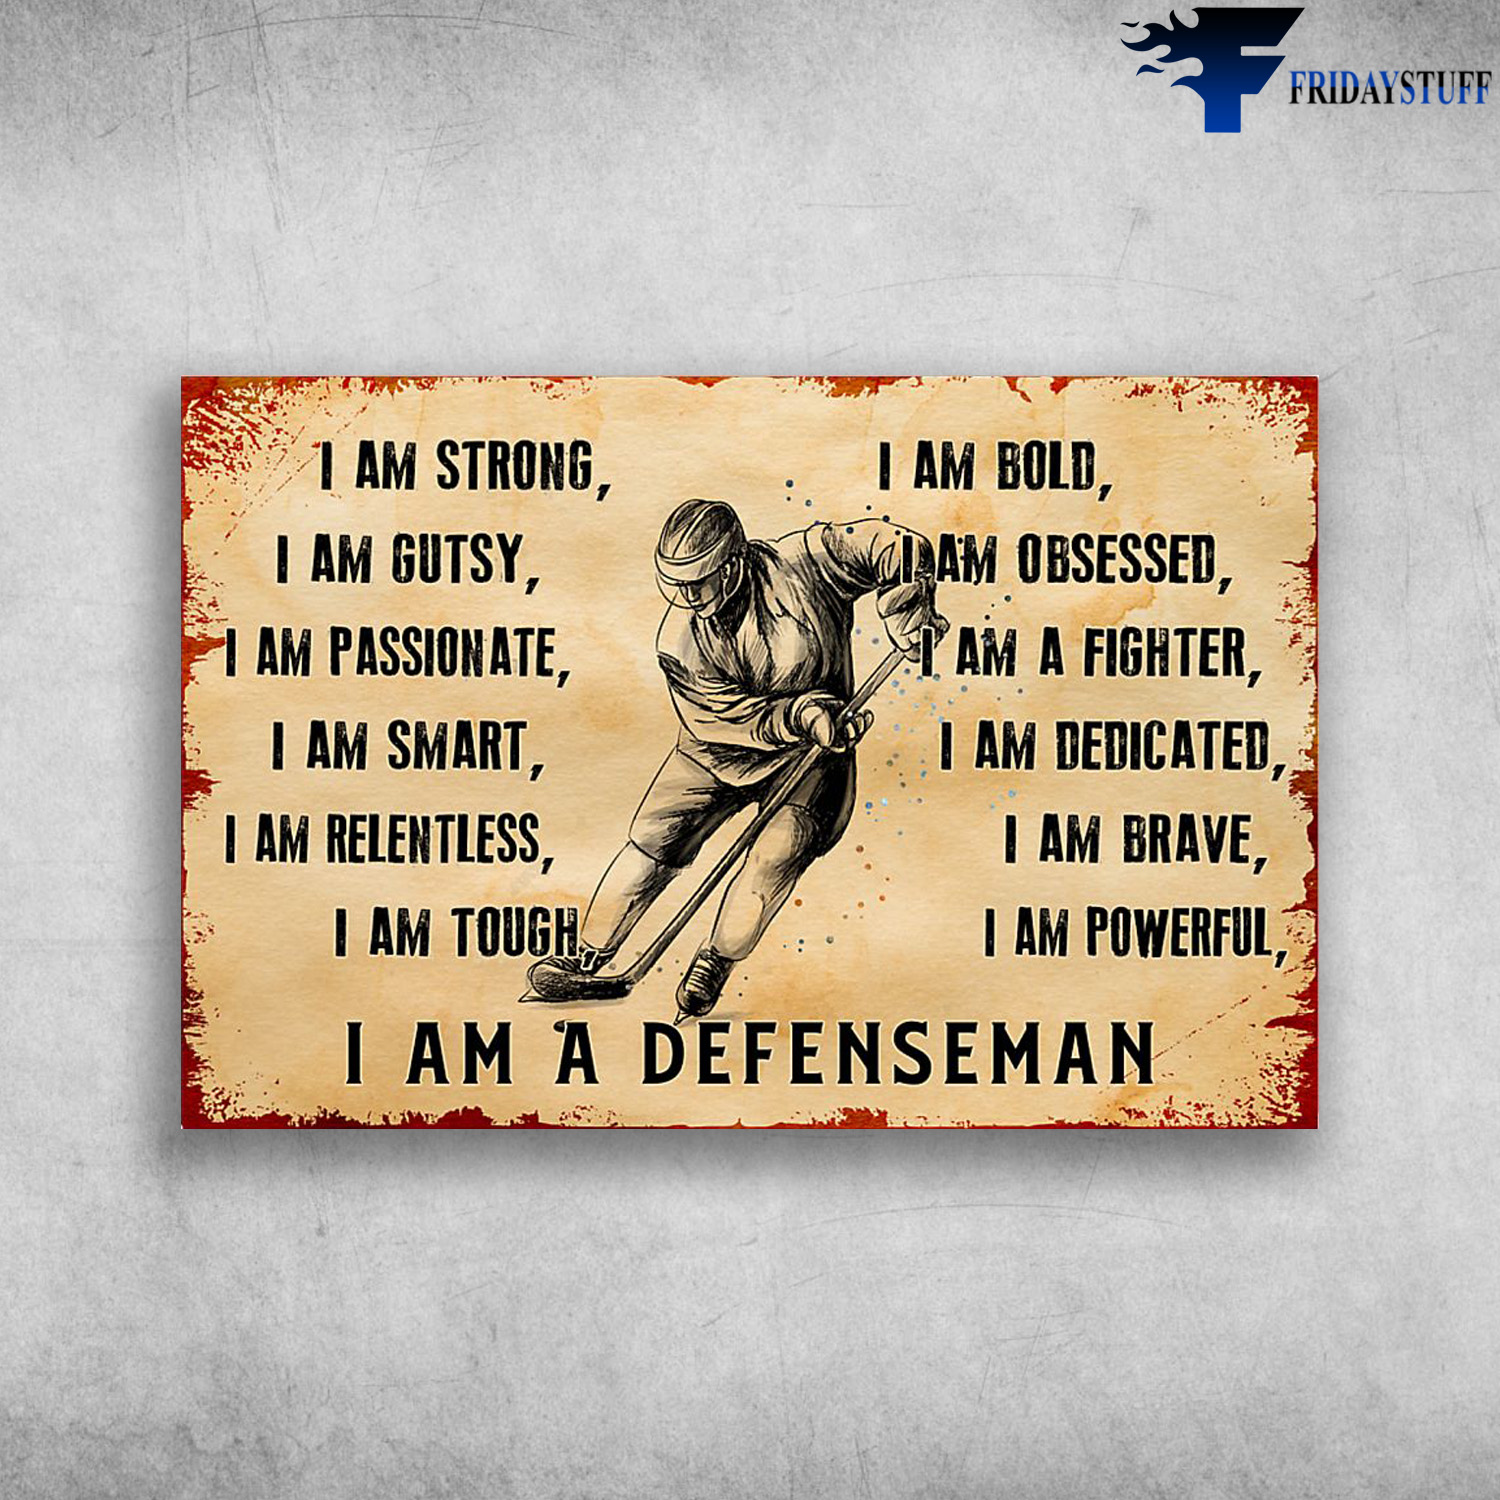 Hockey Man - I Am Strong, I Am Gutsy, I Am Passionate, I Am Smart, I Am Relentless, I Am Tough, I Am Bold, I Am Obsessed, I Am A Fighter, I Am Dedicated, I Am Brave, I Am Powerful, I Am A Defenseman